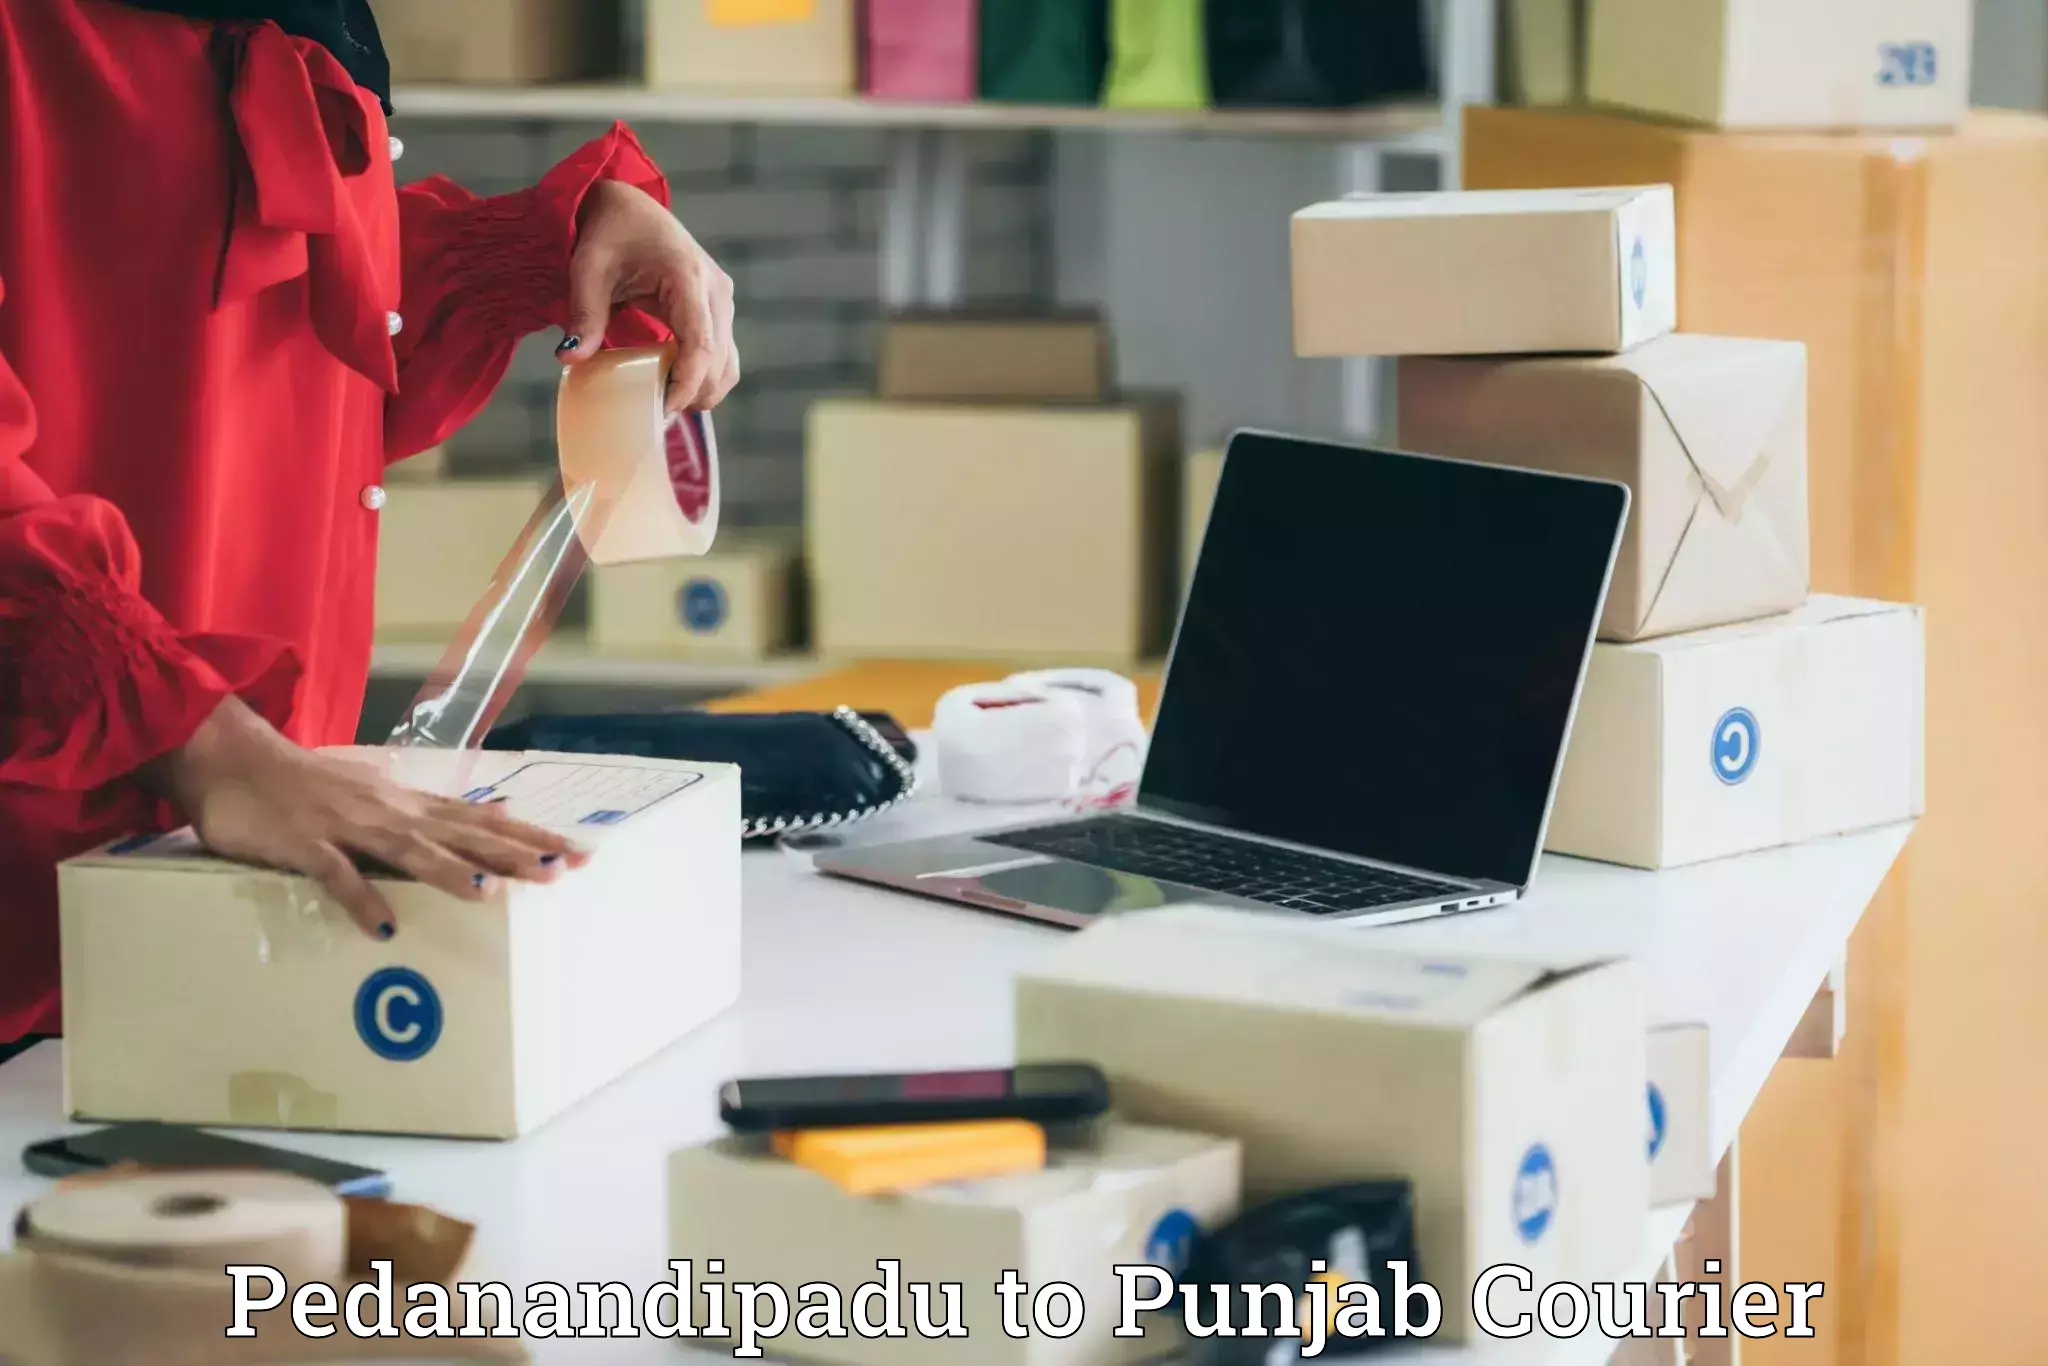 Modern courier technology in Pedanandipadu to Punjab